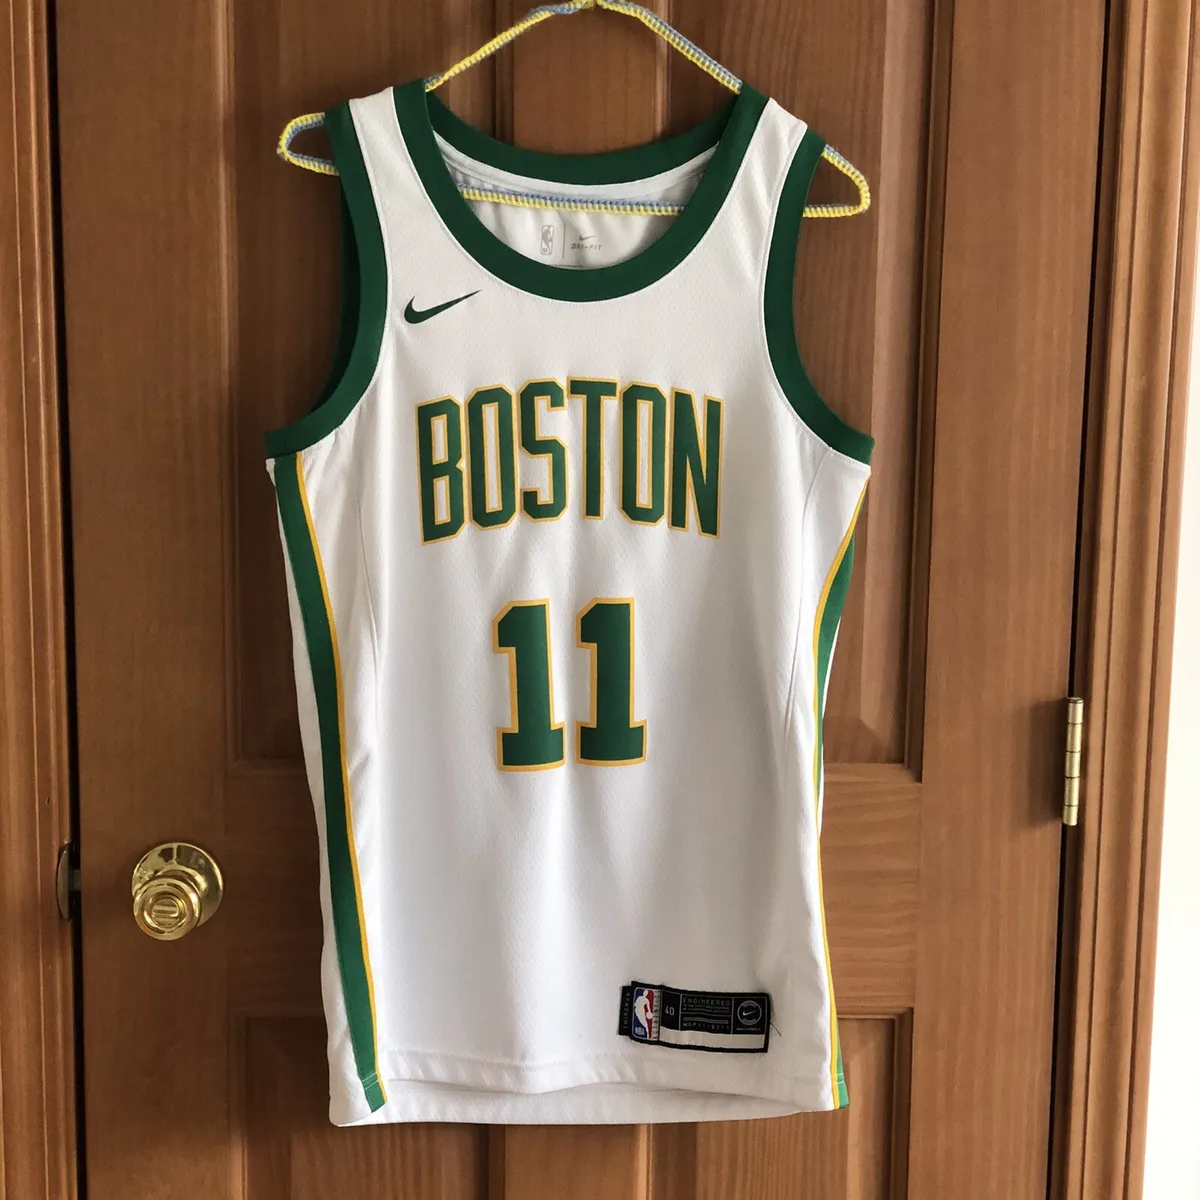 Nike Basketball jersey SWINGMAN in green/ white